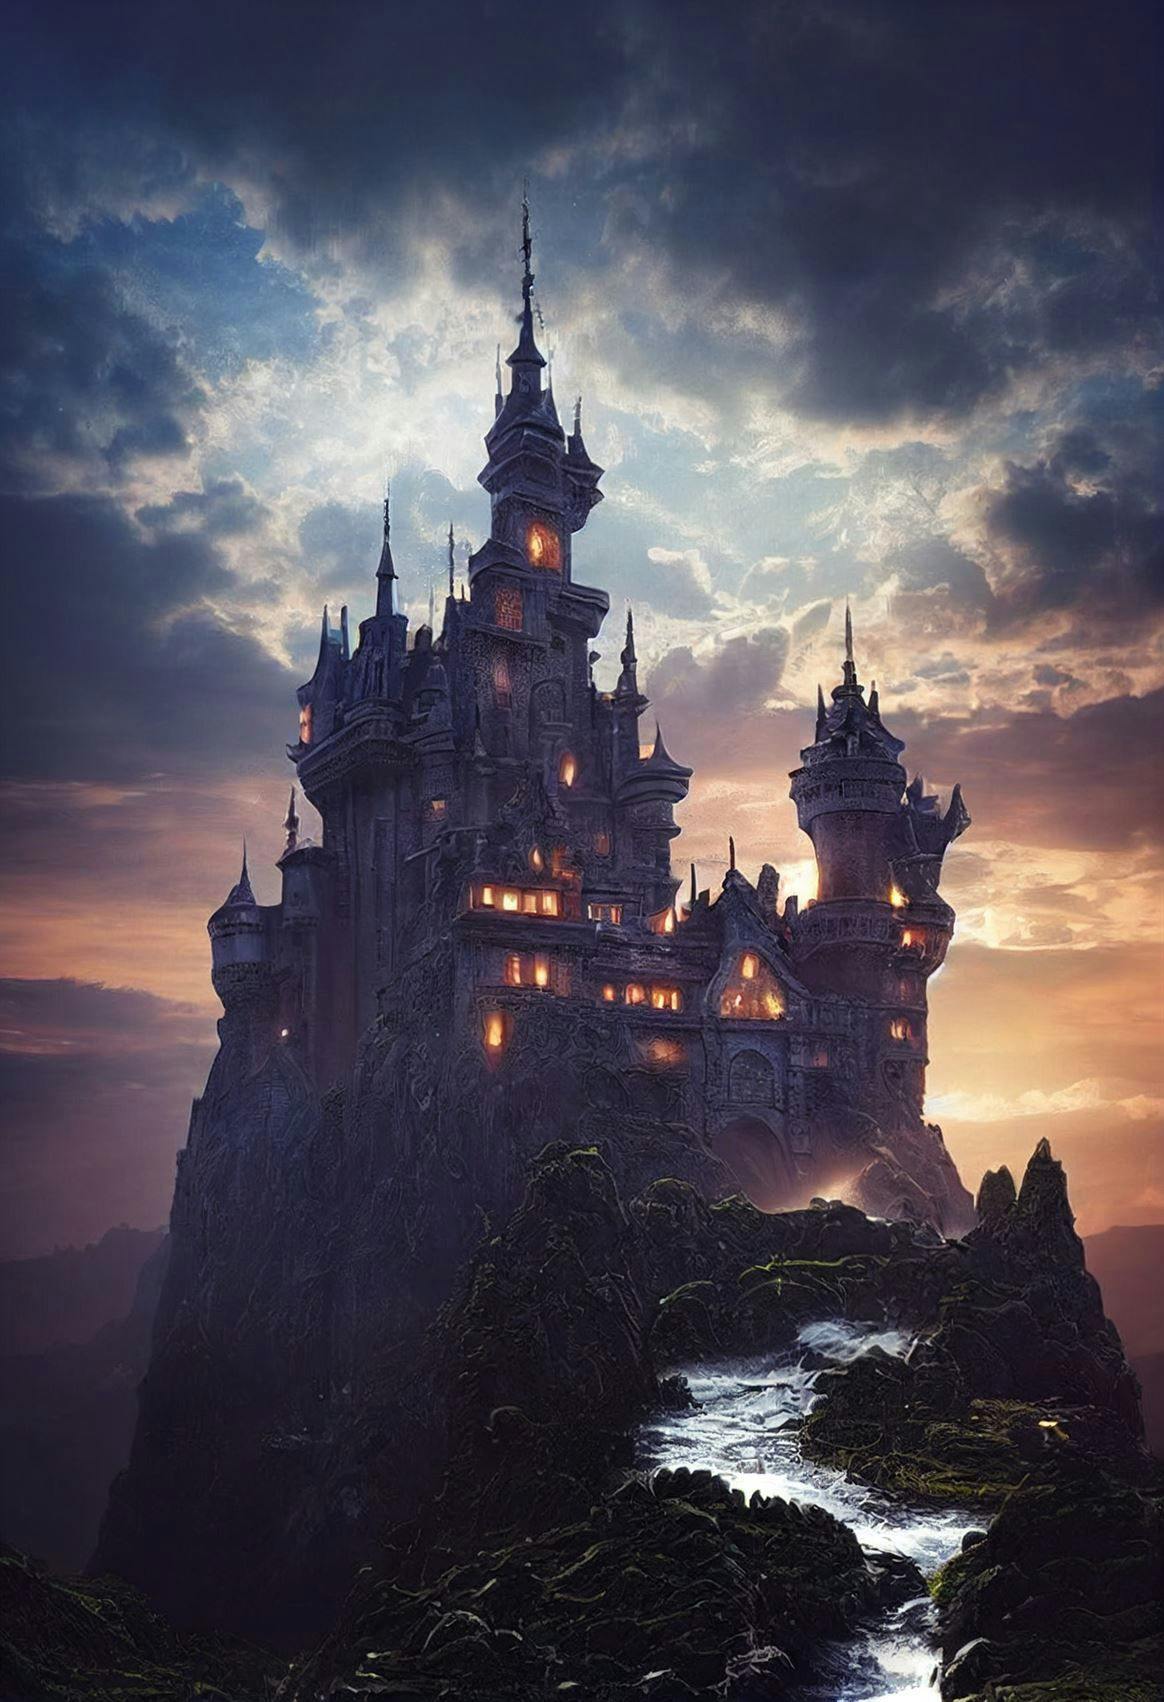 Spooky medieval castle